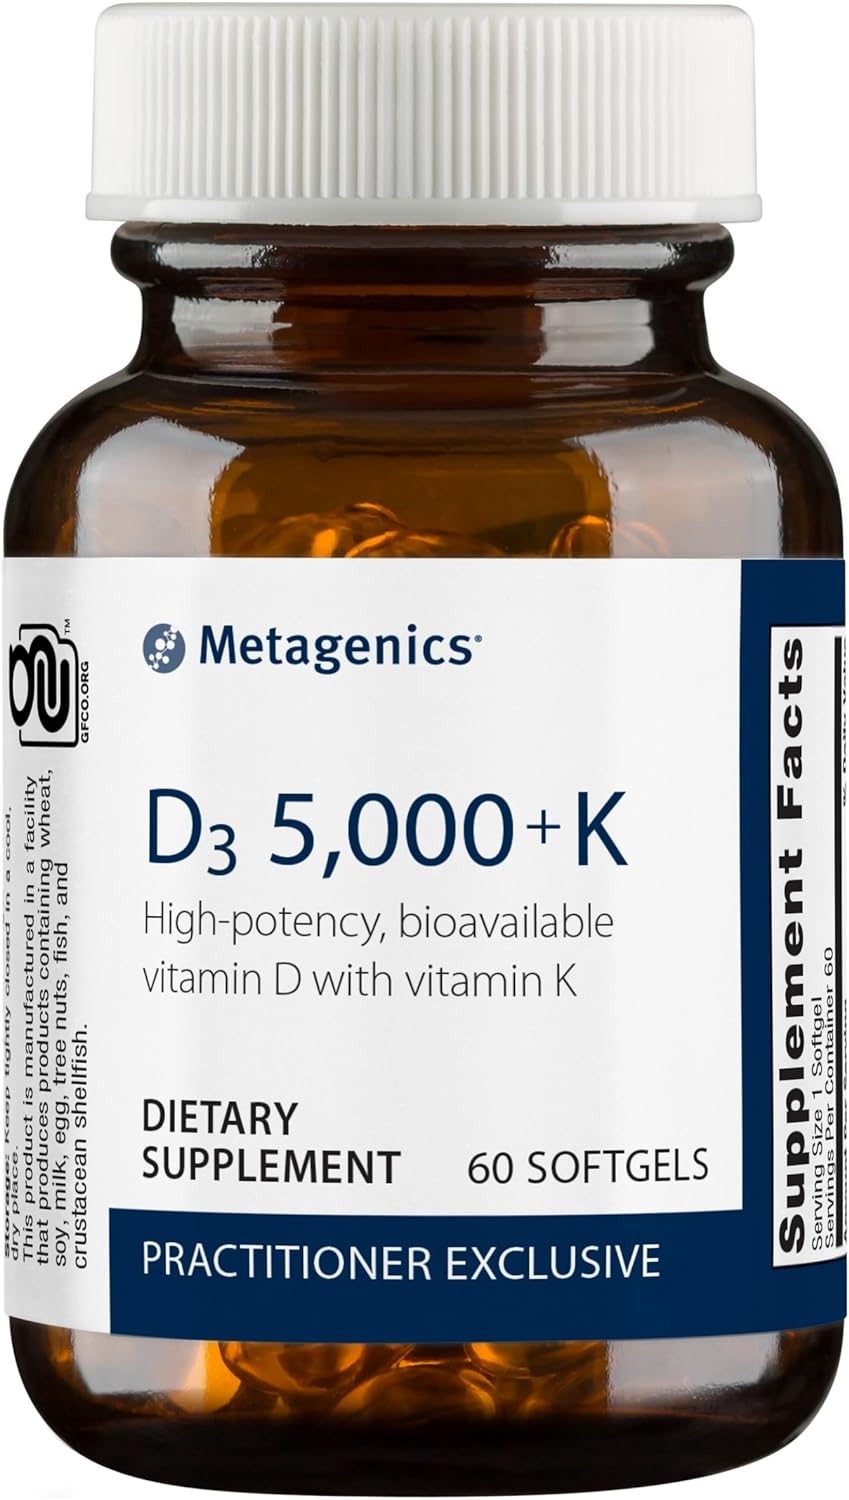 Metagenics D3 5,000 + K - for Immune Support, Bone Health & Heart Heal